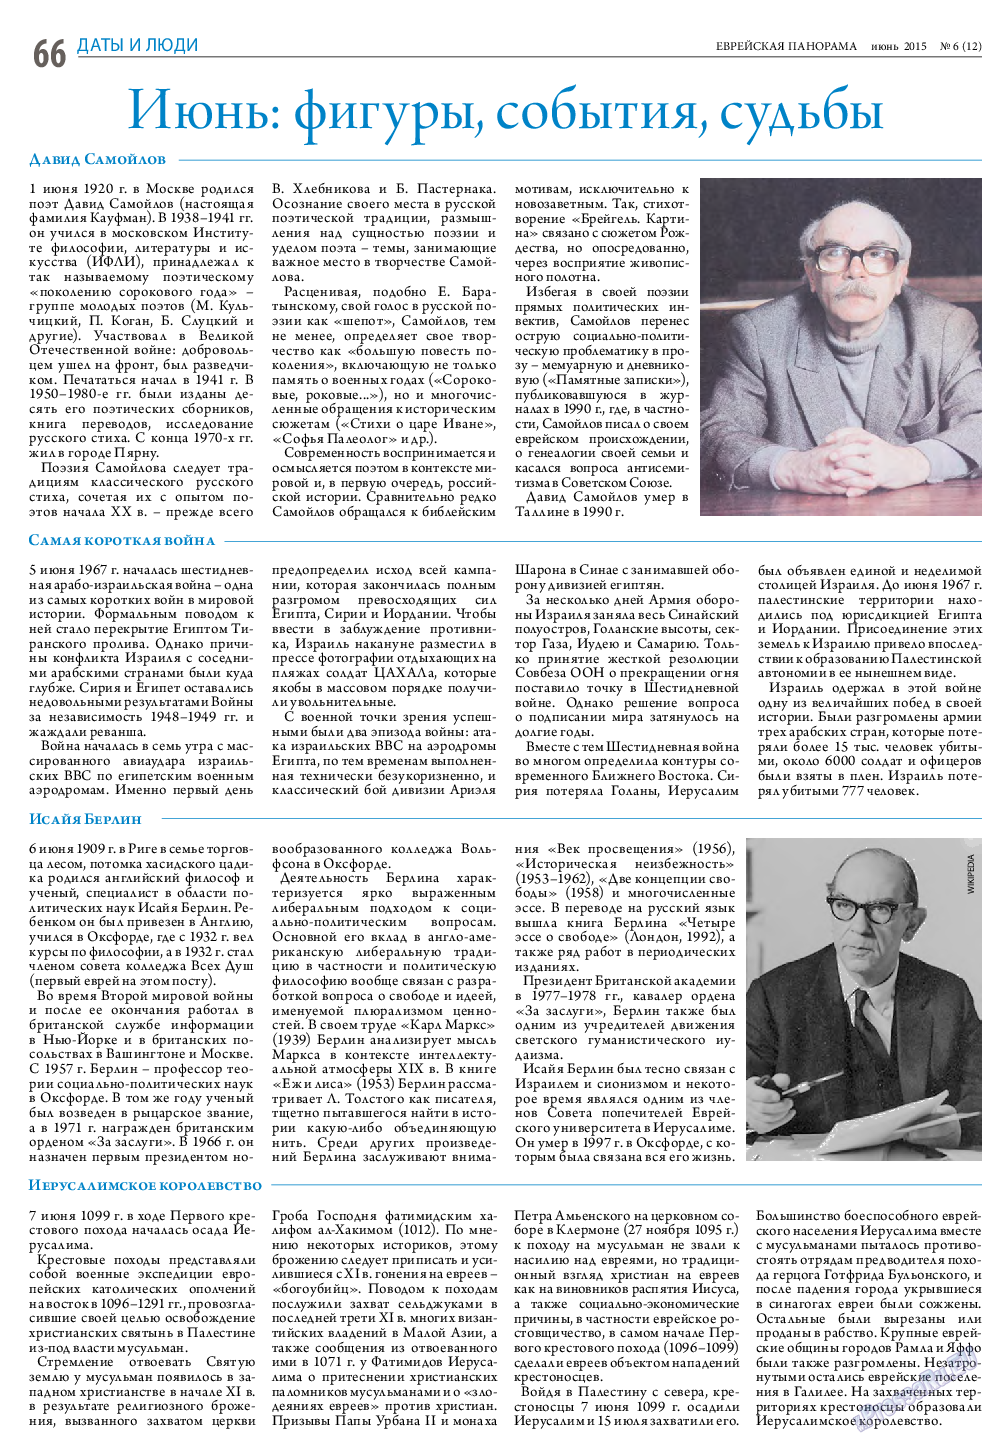 Еврейская панорама, газета. 2015 №6 стр.66